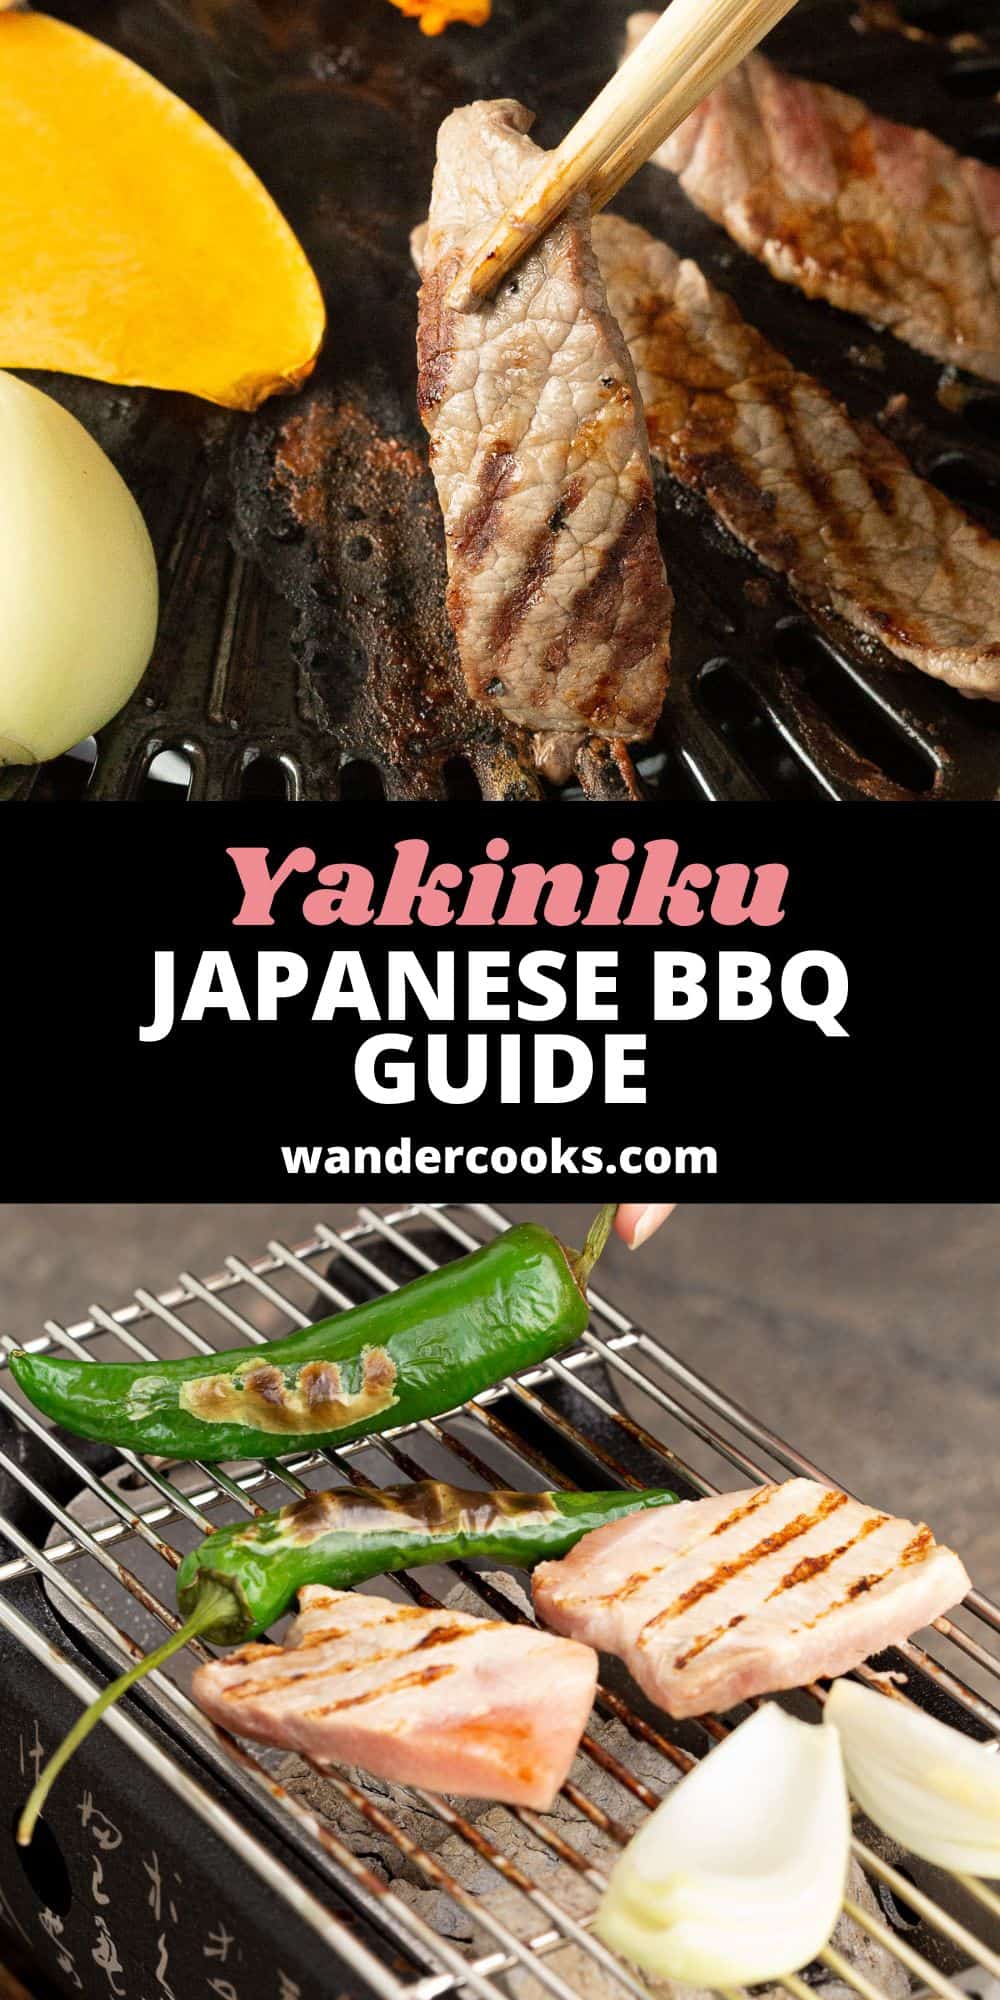 Easy Guide to Yakiniku at Home (Japanese BBQ)